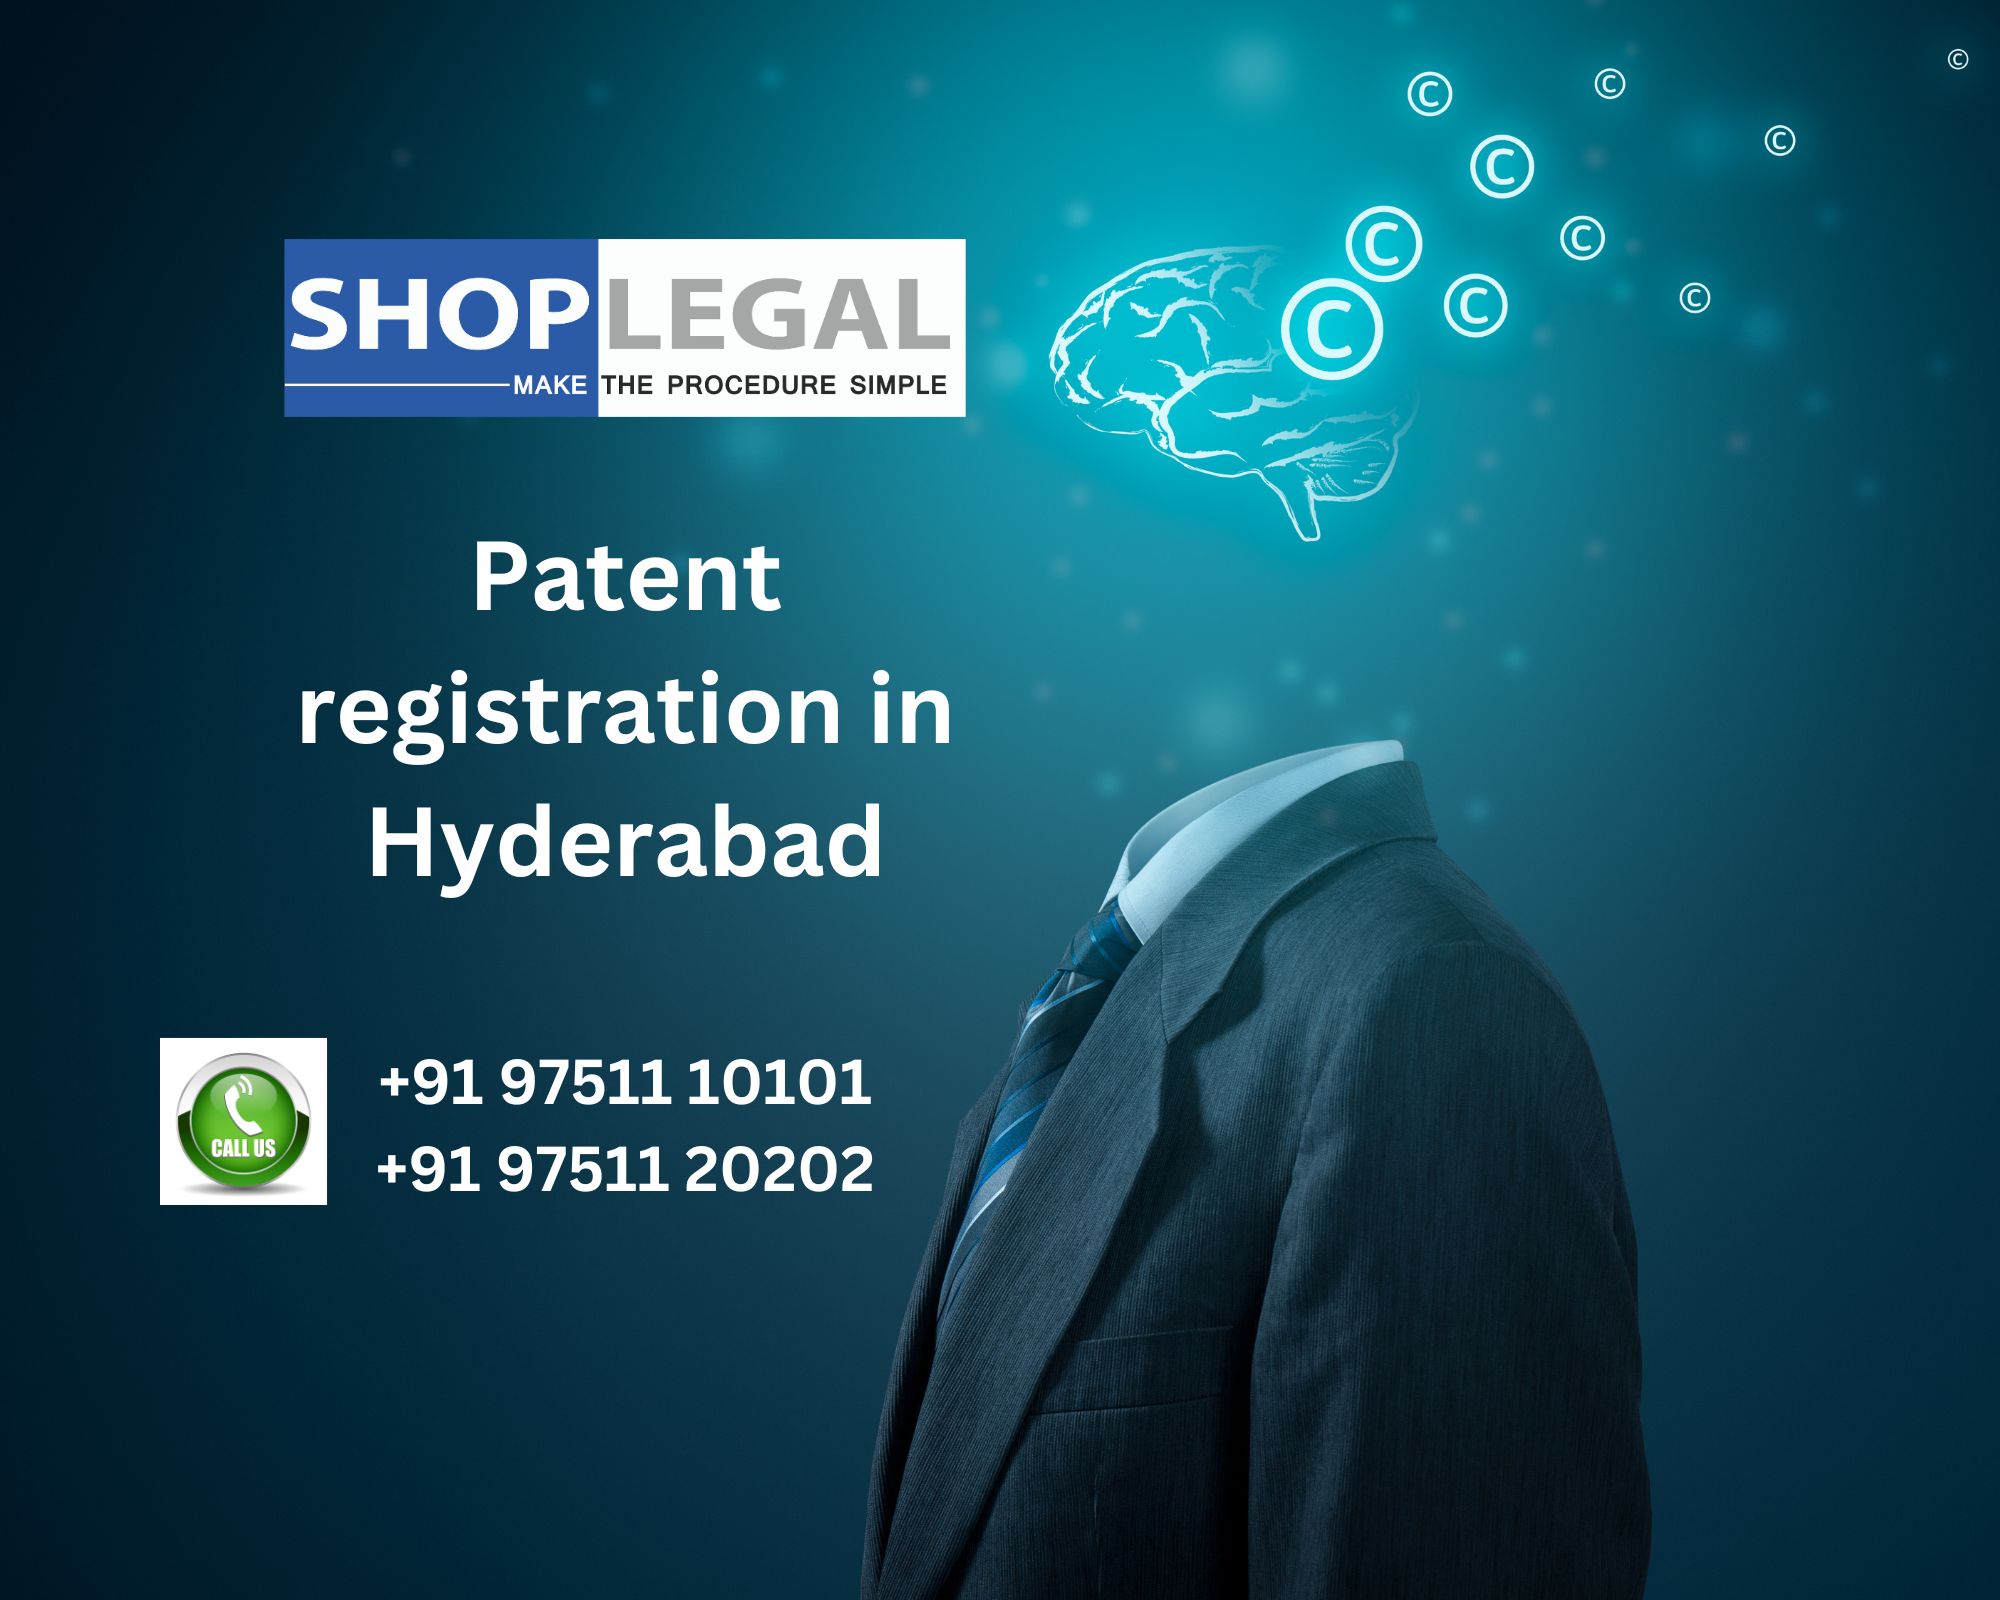 Patent registration in Hyderabad